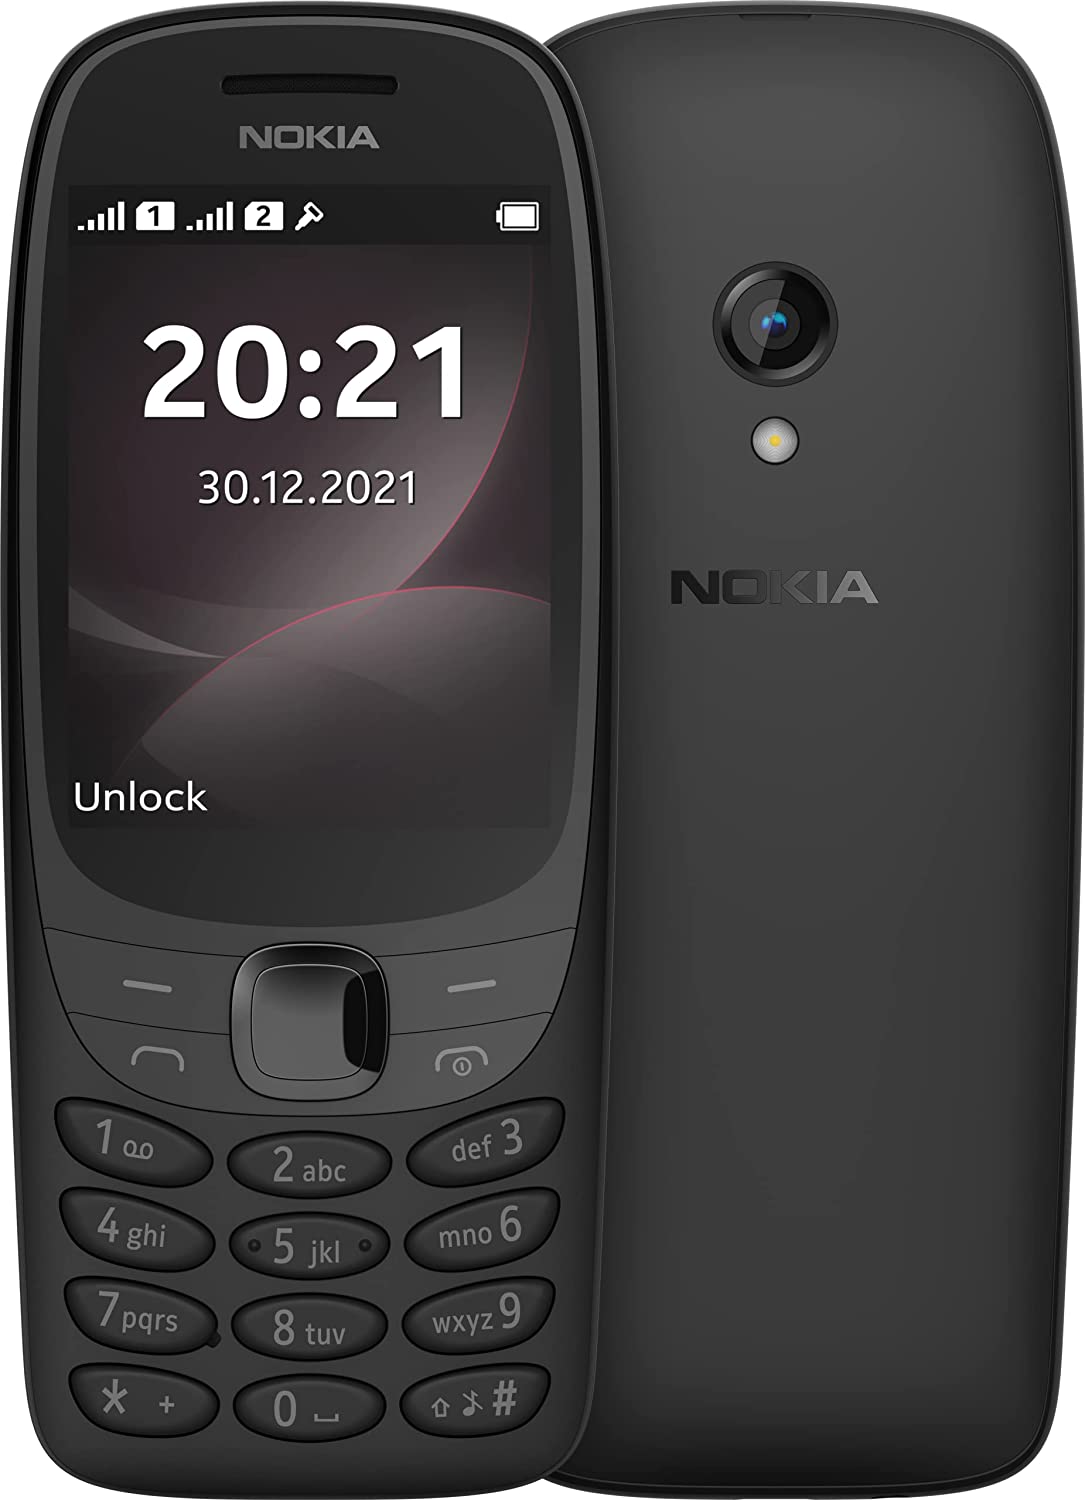 Nokia 6310 (2021) Dual-SIM 8MB ROM + 16MB RAM